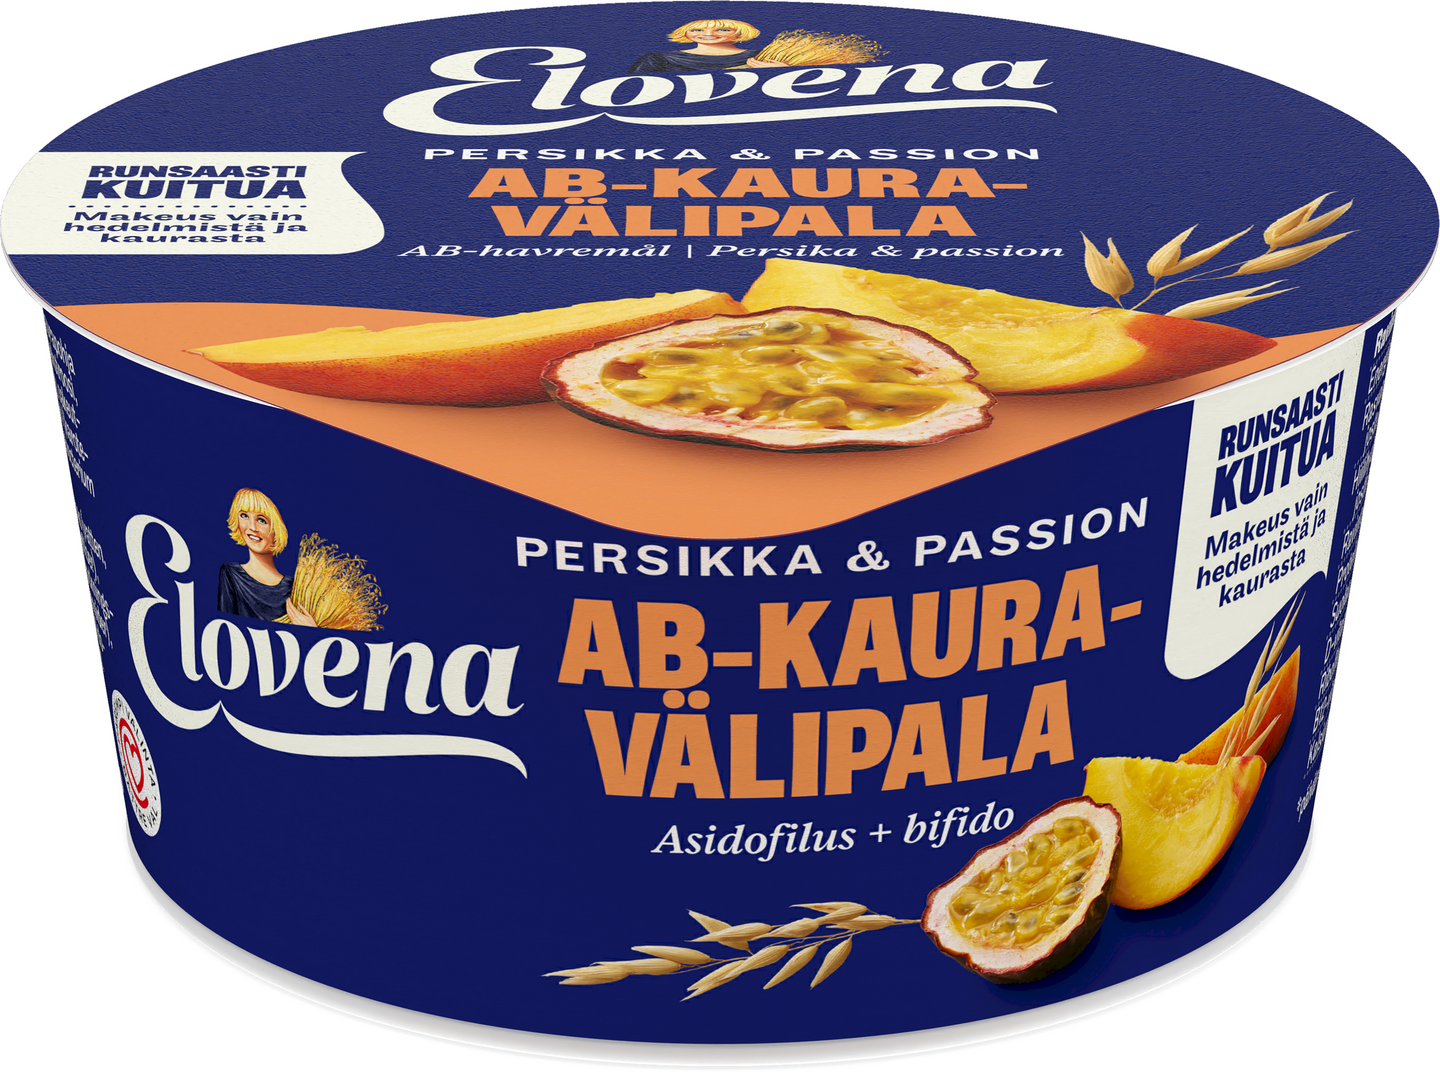 Elovena AB-kauragurtti 150g persikka-passionhedelmä gluteeniton